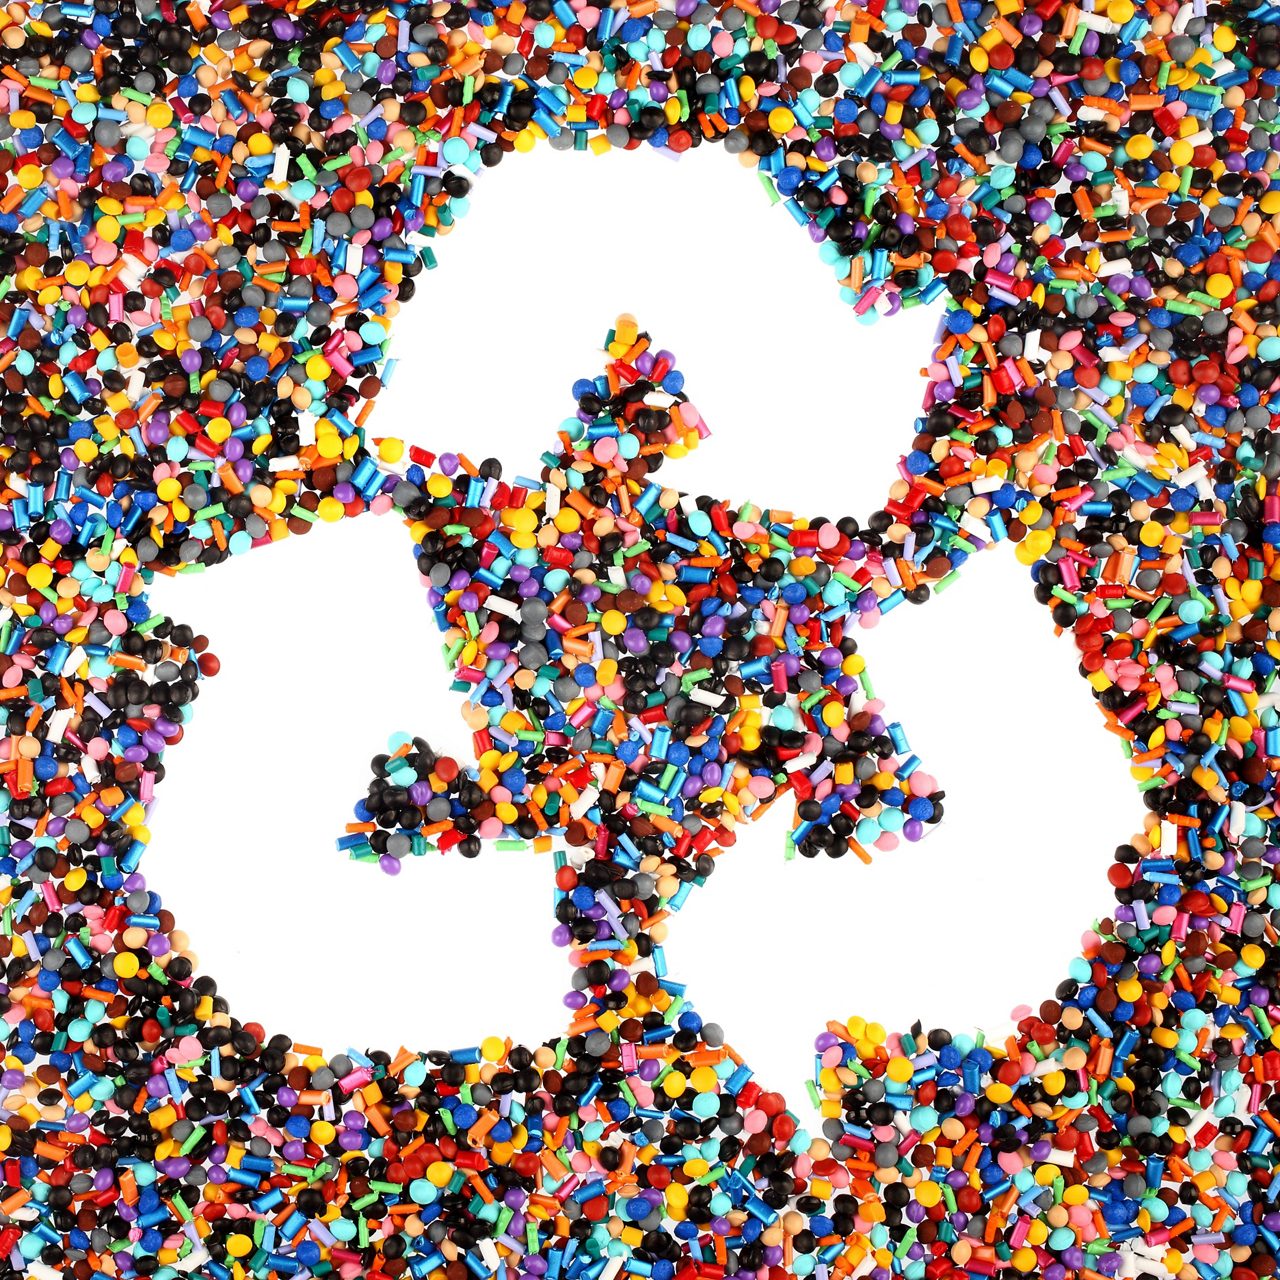 Símbolo de reciclagem no meio de contas de plástico coloridas